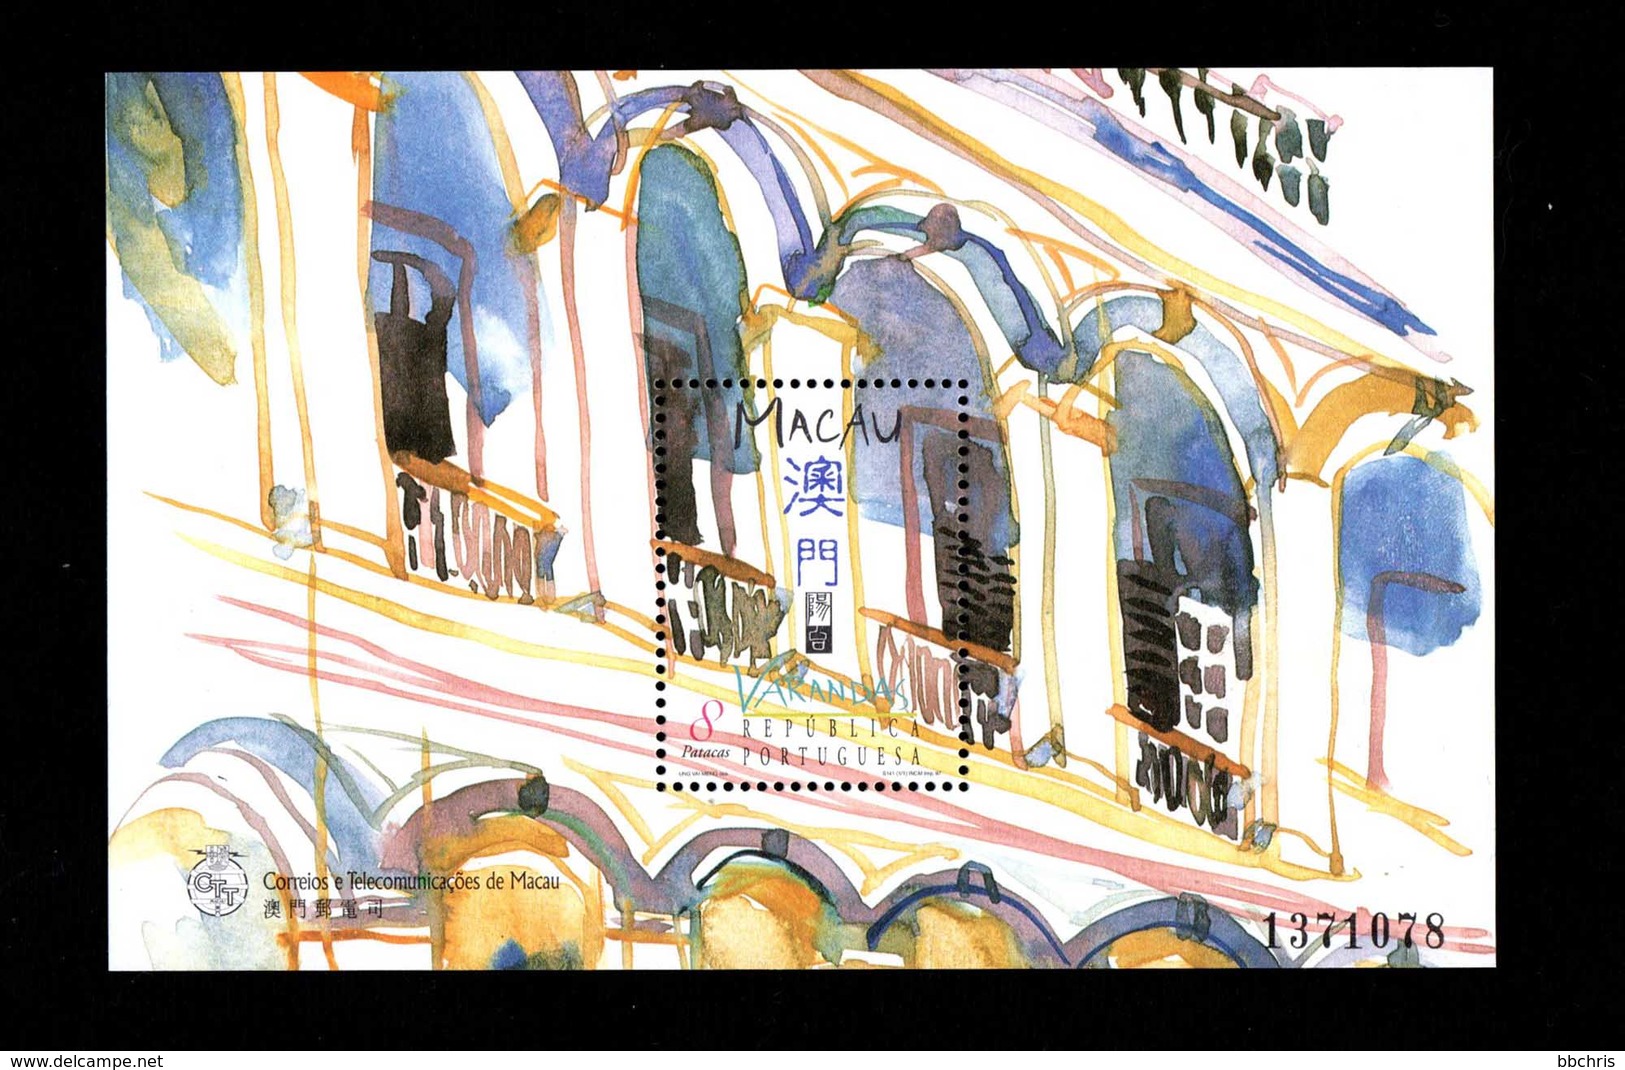 Macau Macao 1997 Varandas Balconies Painting Souvenir Sheet MNH Mint - Booklets